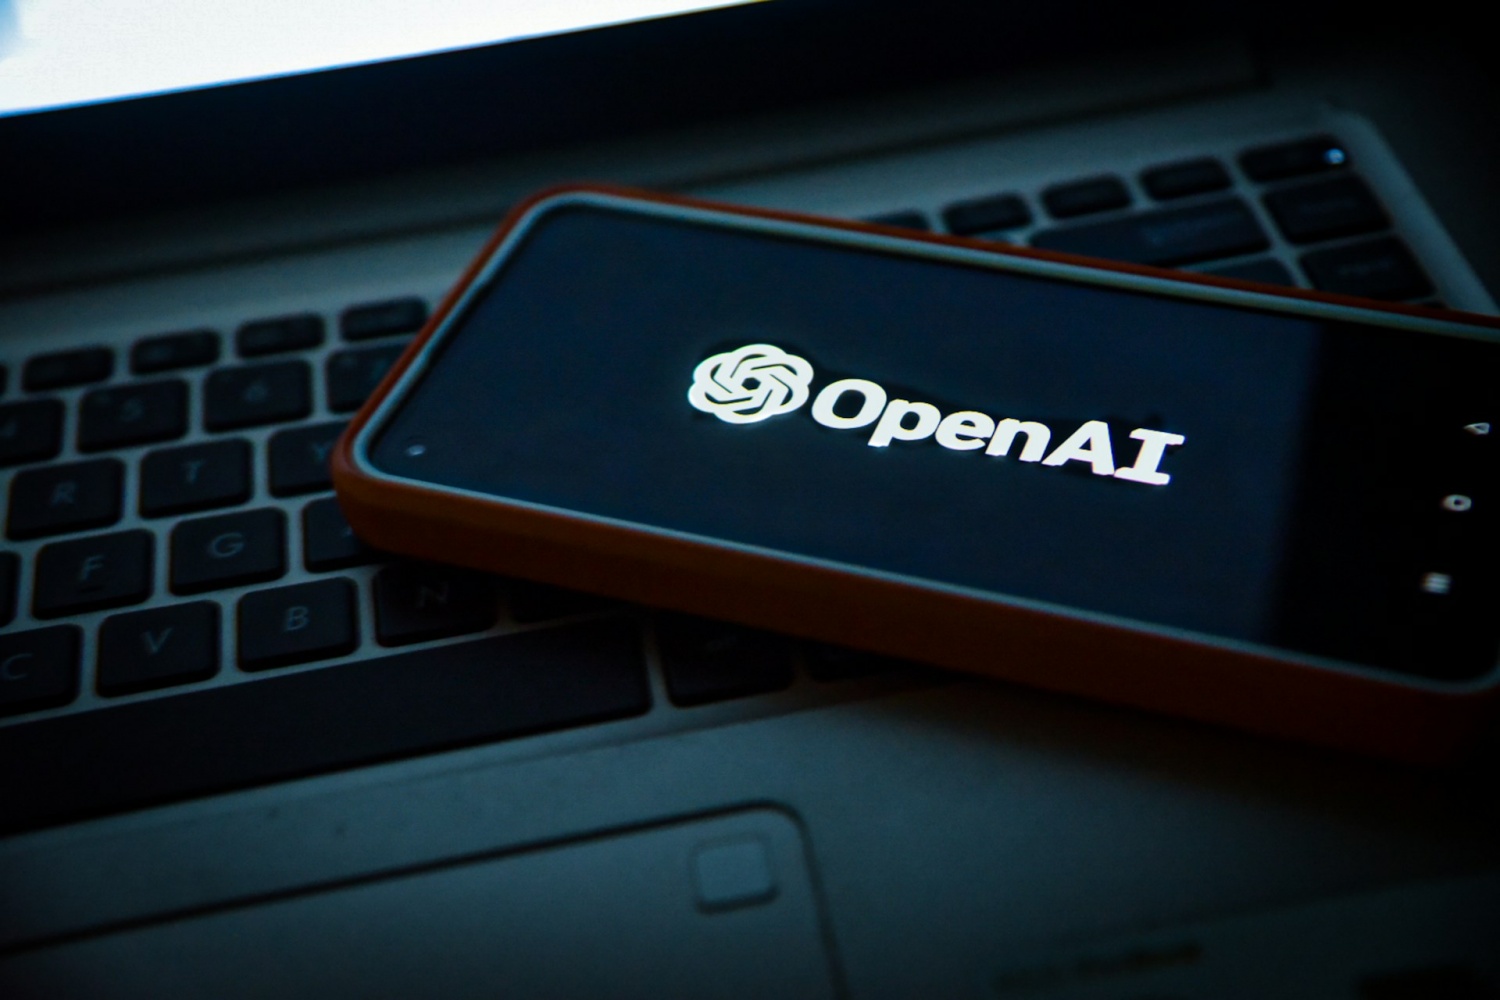 Dotdash Meredith Enhances Ad-Targeting with OpenAI Partnership